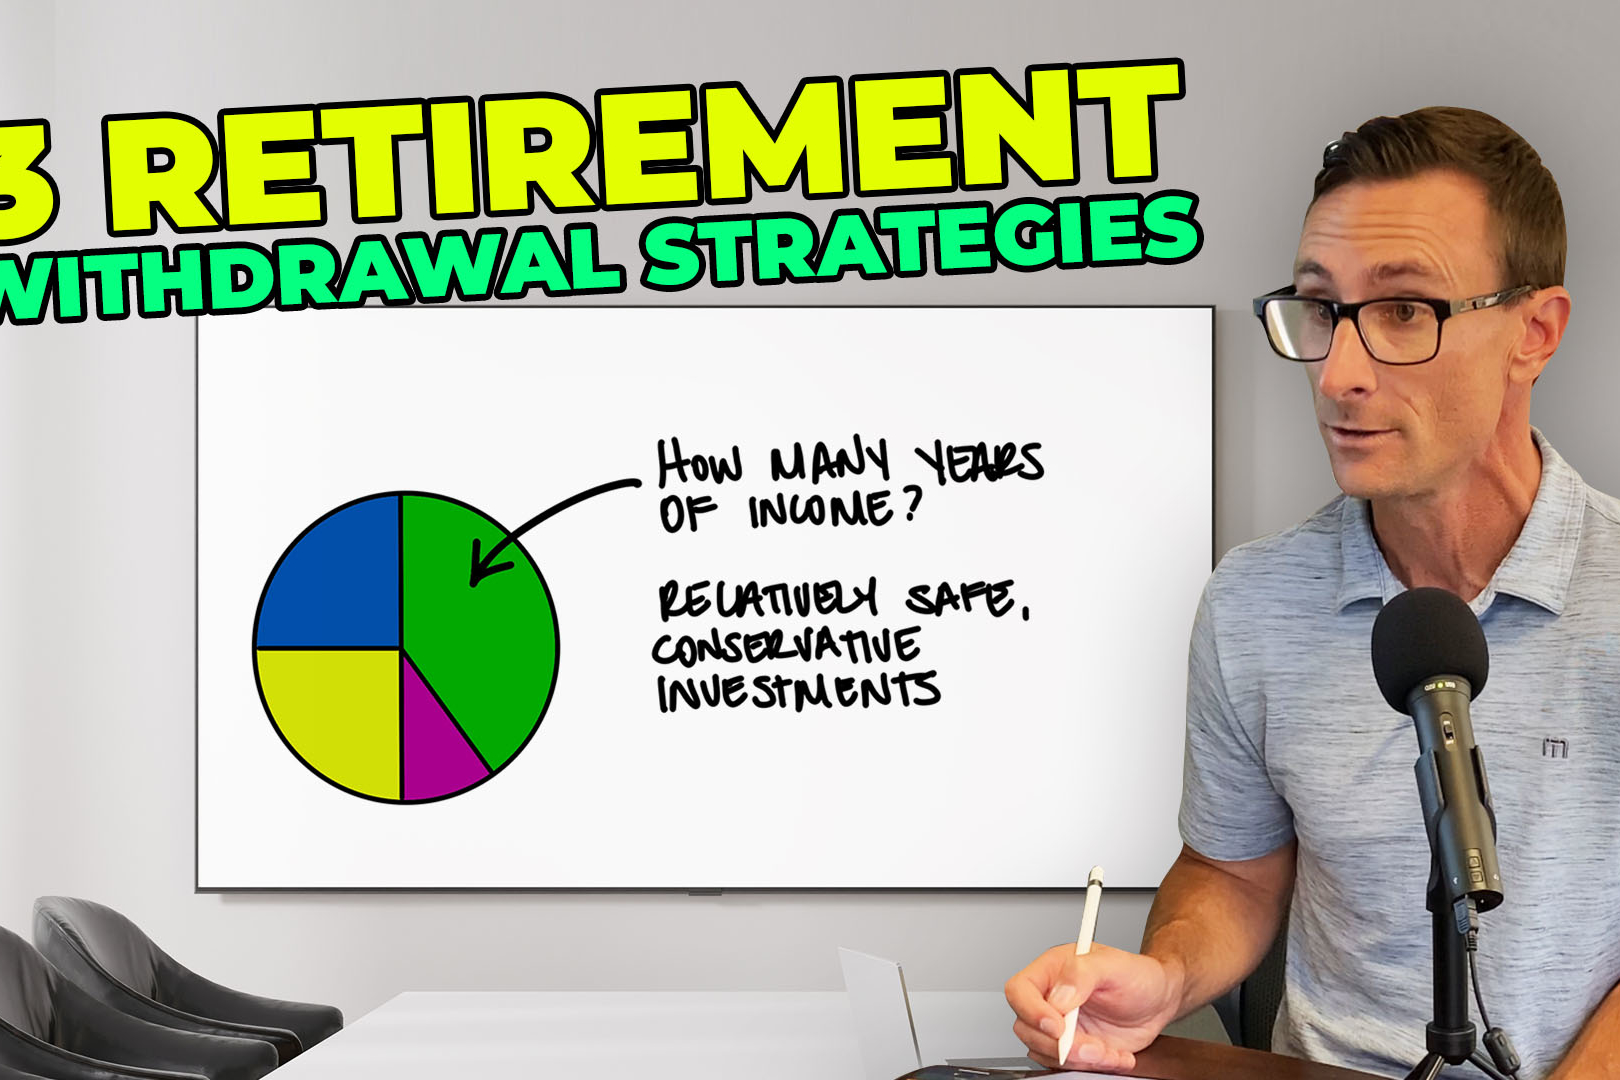 3 retirement withdrawal strategies